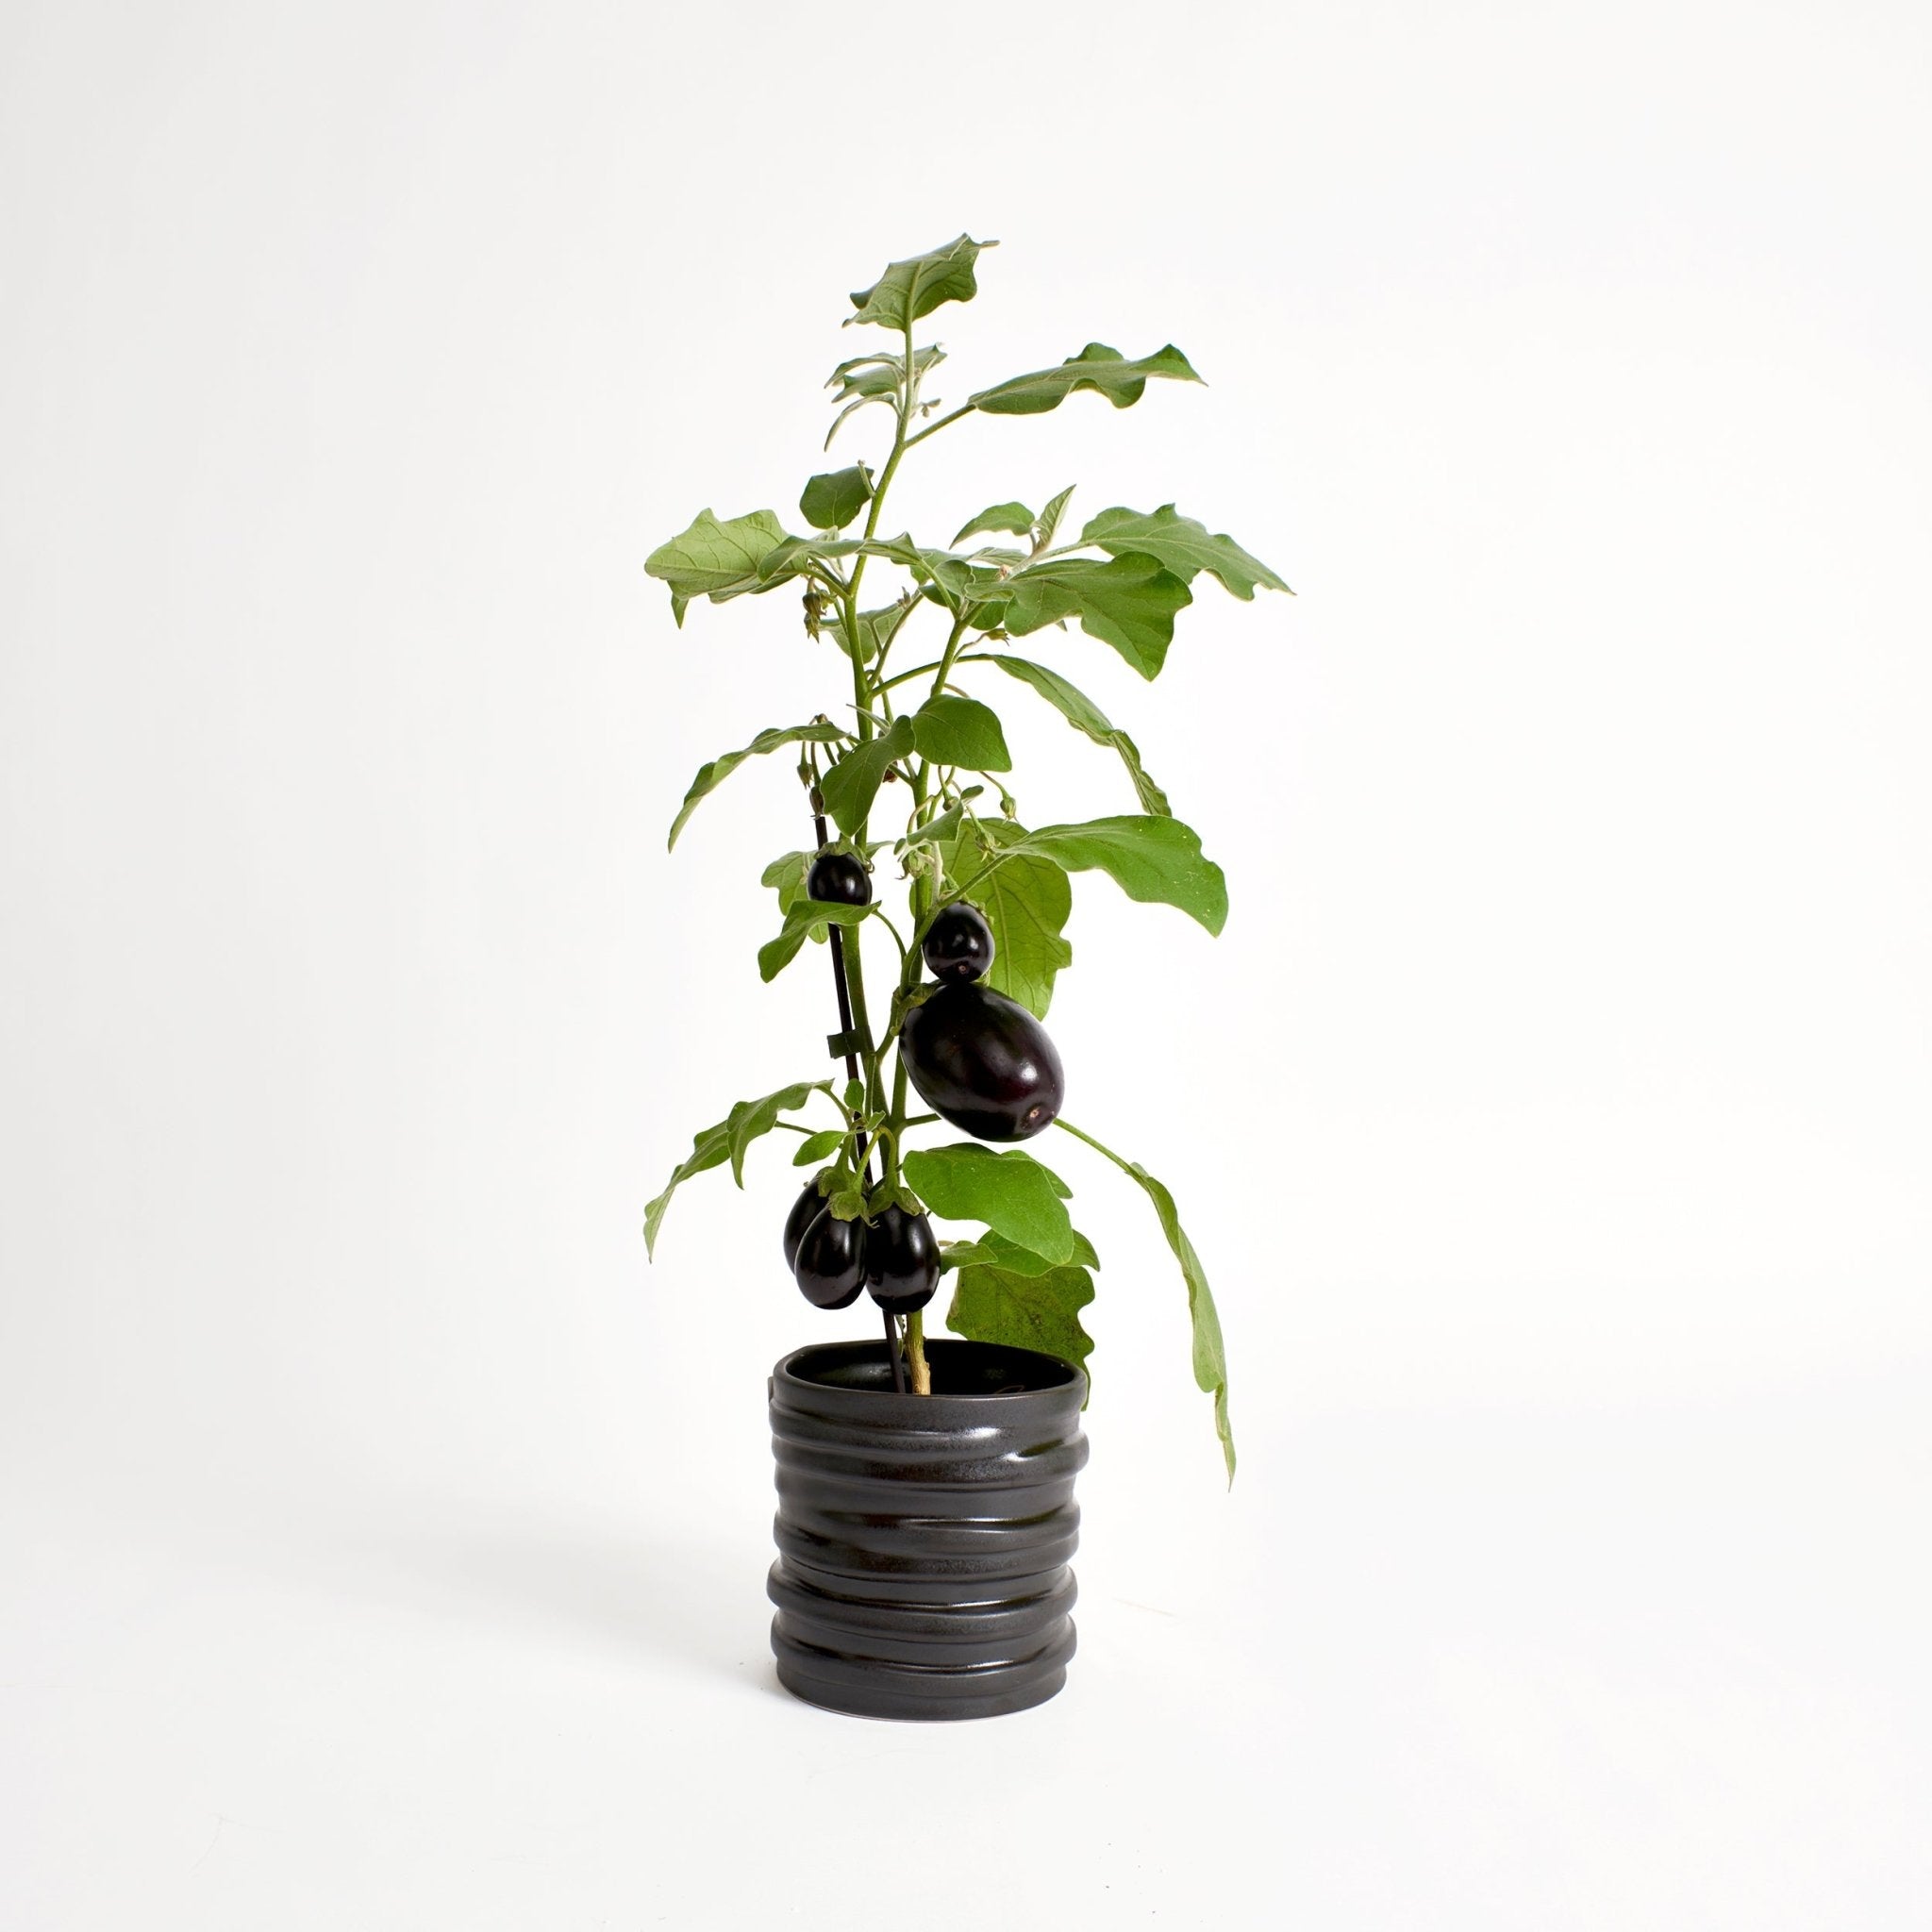 Alfonso pot - Graphite black flower pot by Project 213A